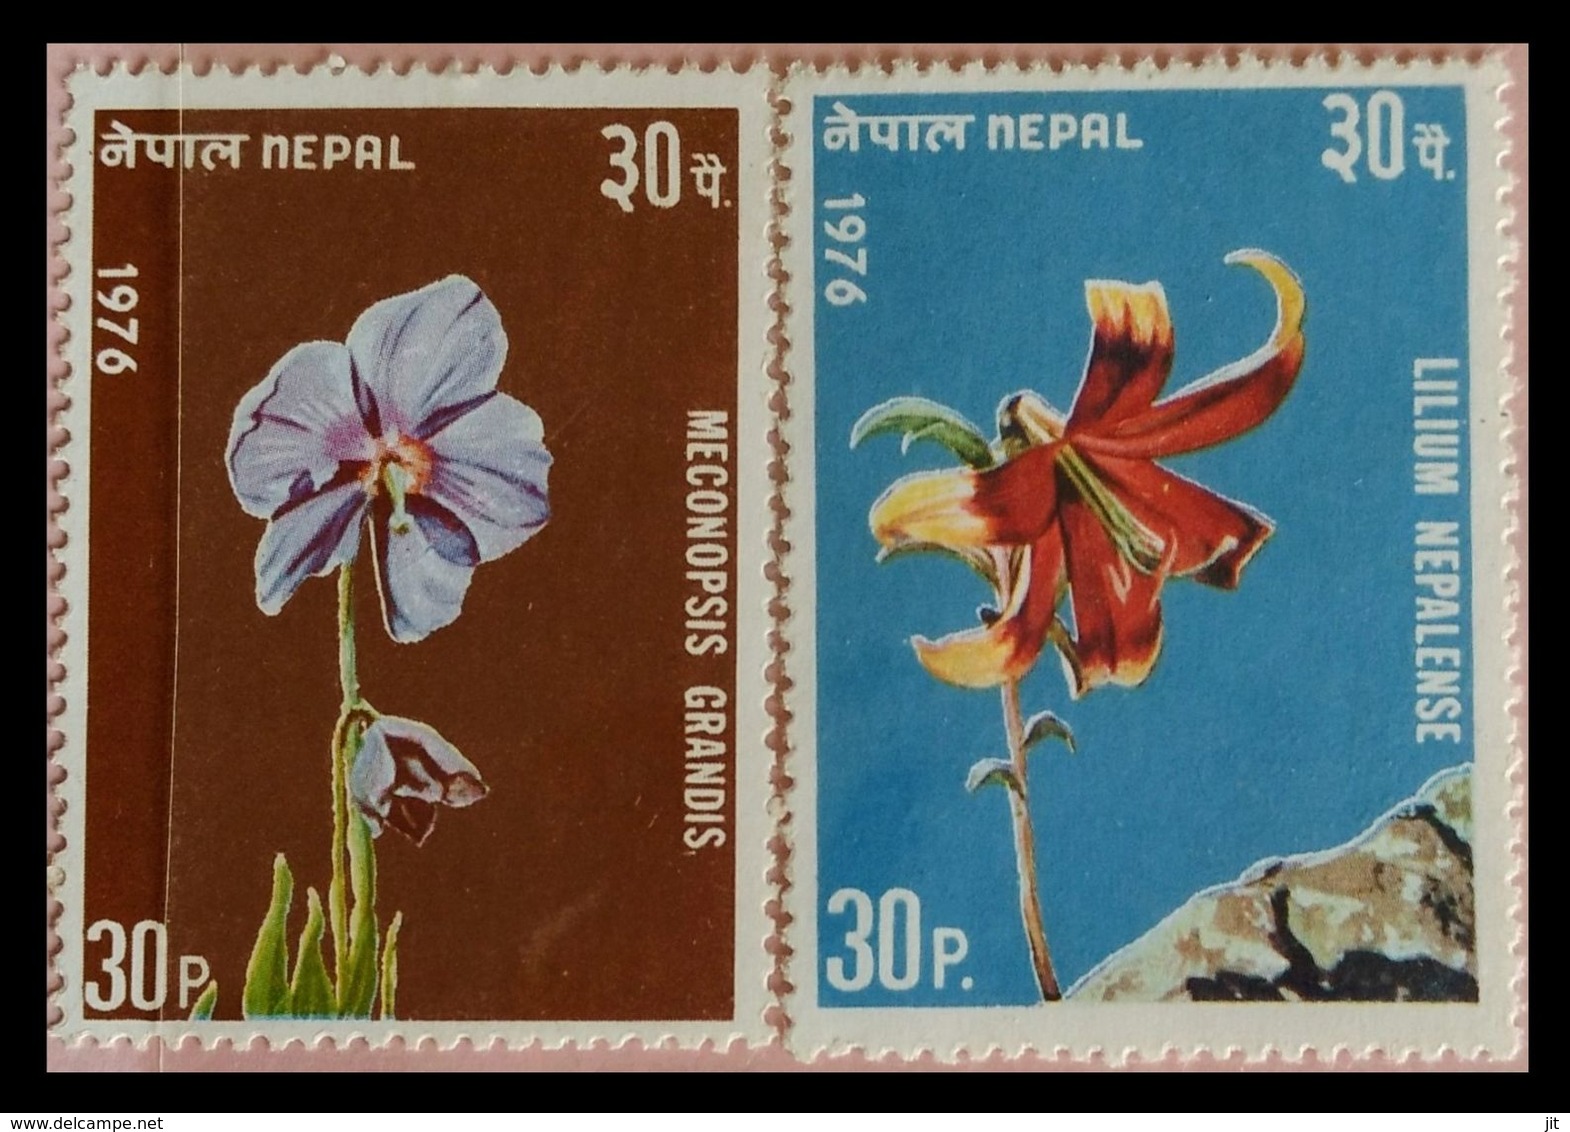 115. NEPAL (30P) 1976 (02 DIFF) STAMP FLOWERS . MNH - Nepal